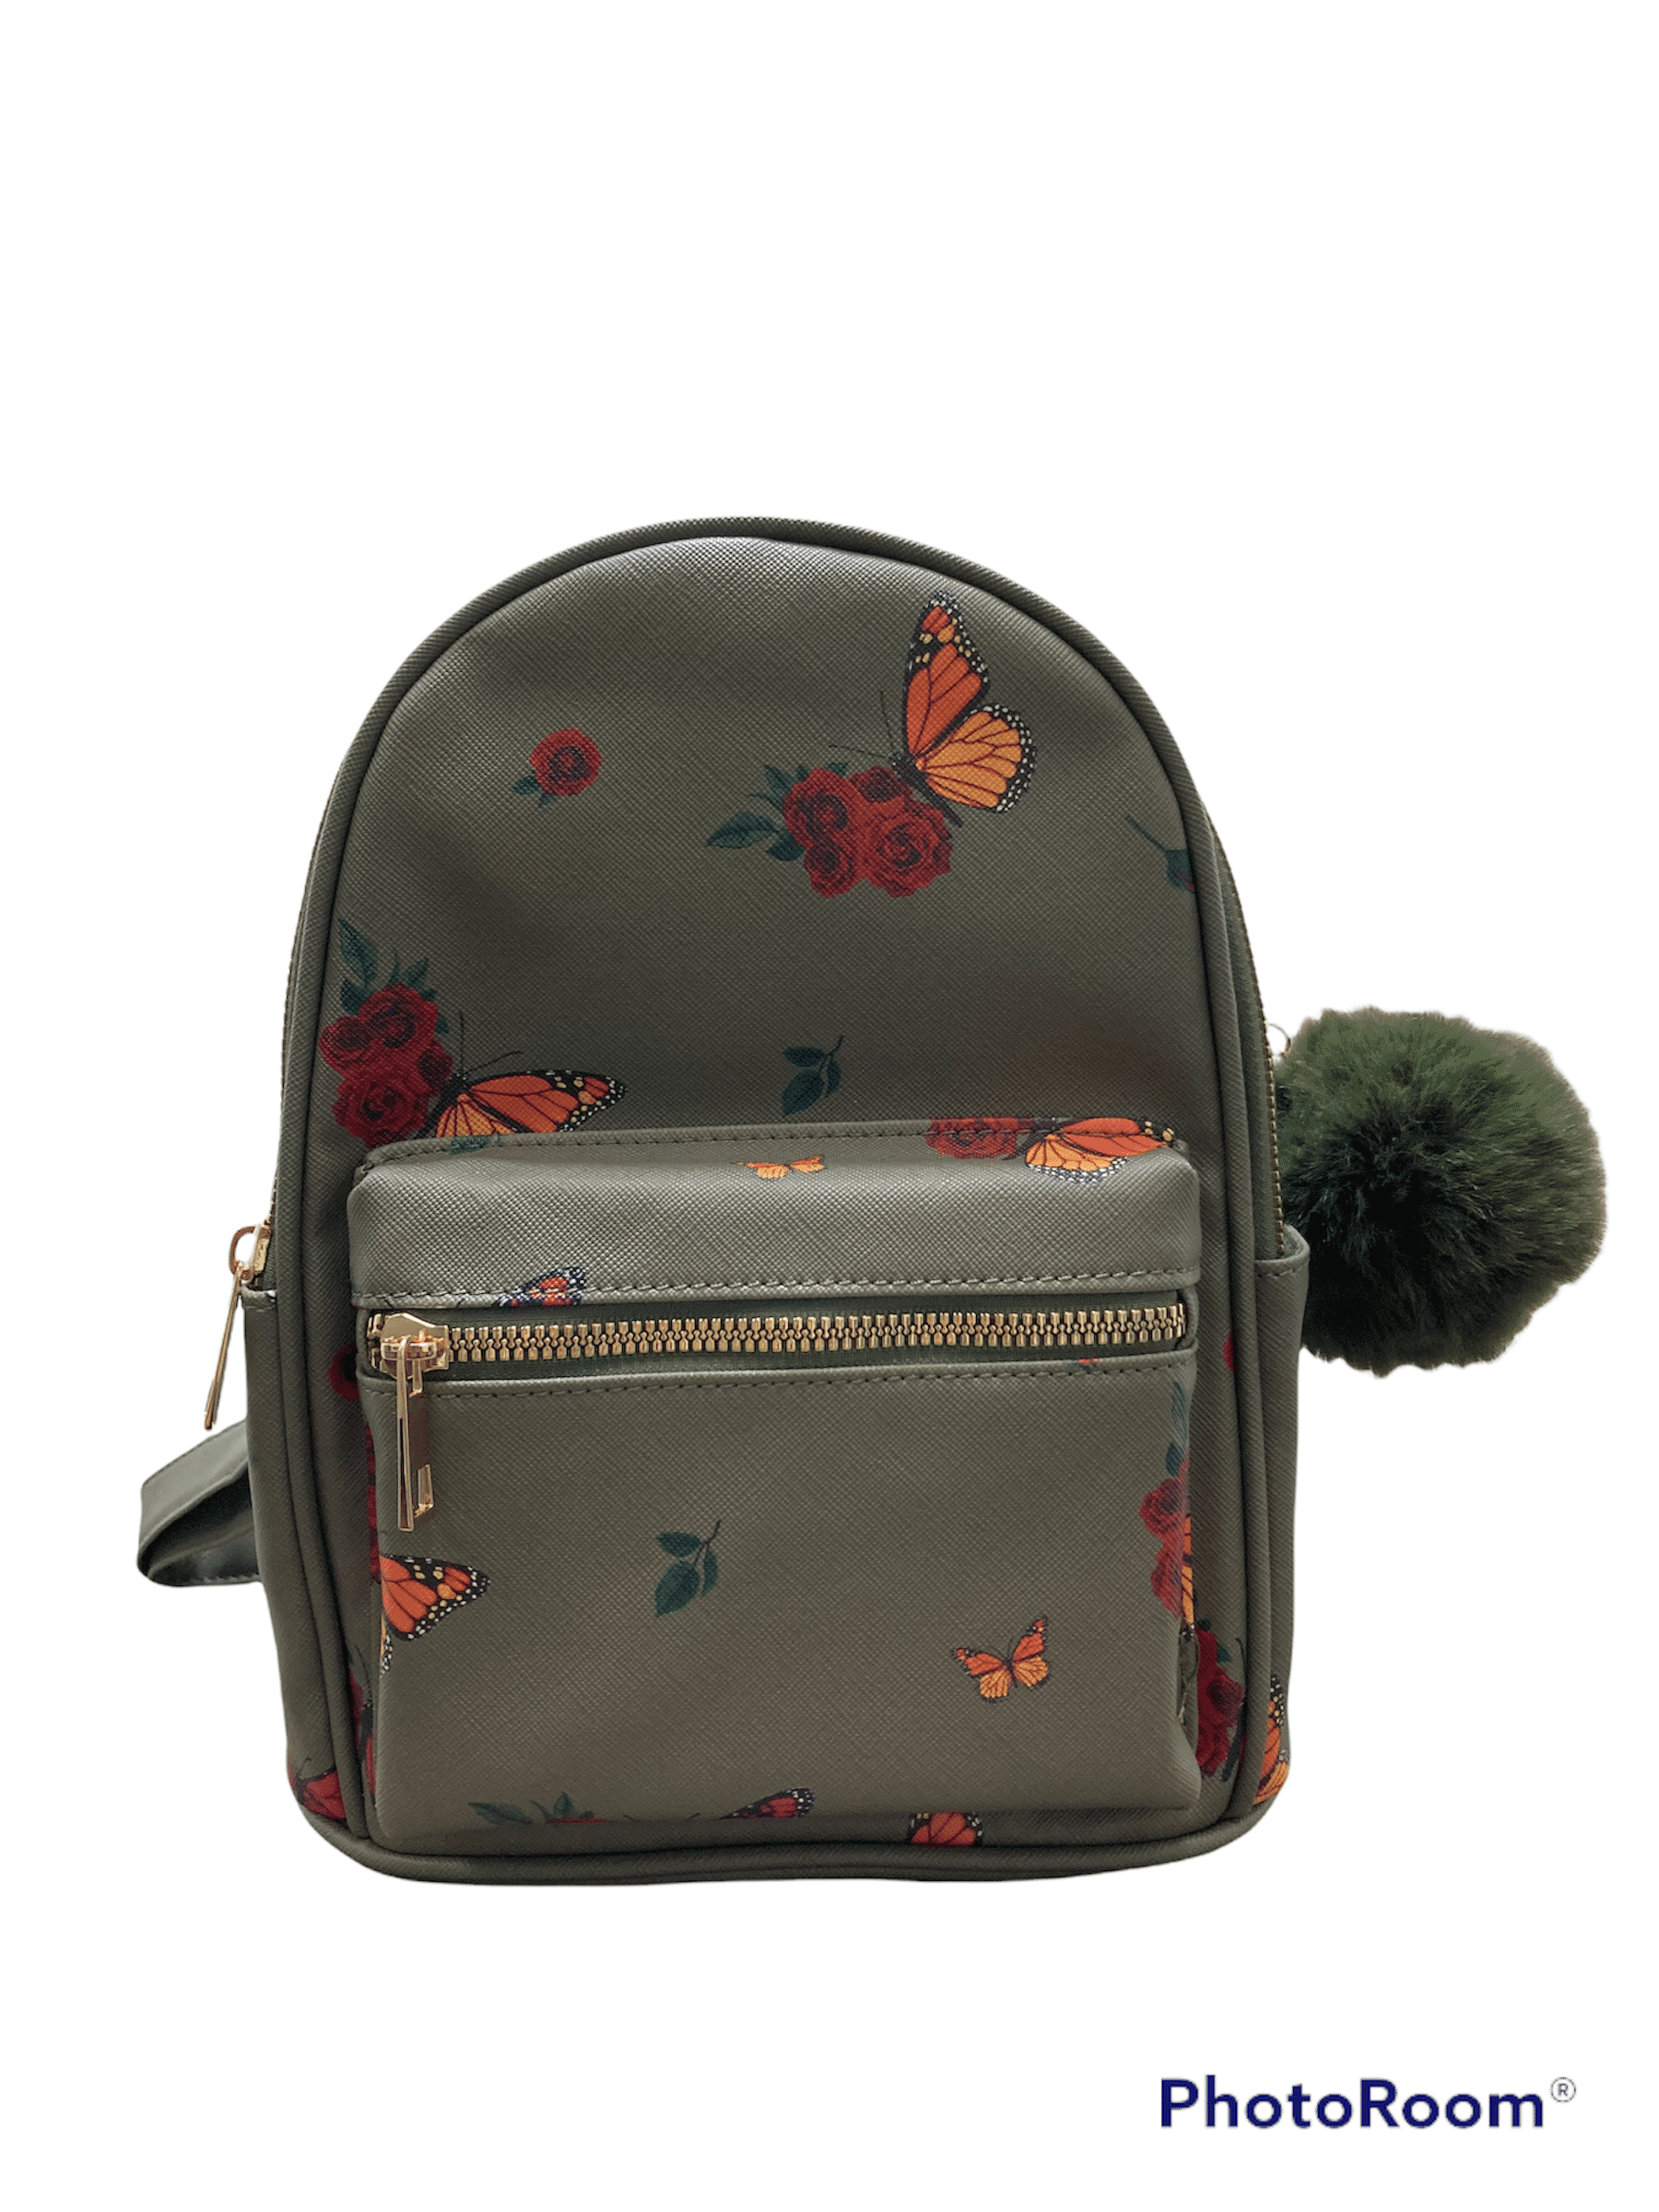 Backpack for Women, Nylon Travel Backpack Purse Black Shoulder Bag Small  Casual Daypack for Girls (Black Quilted) - Walmart.com